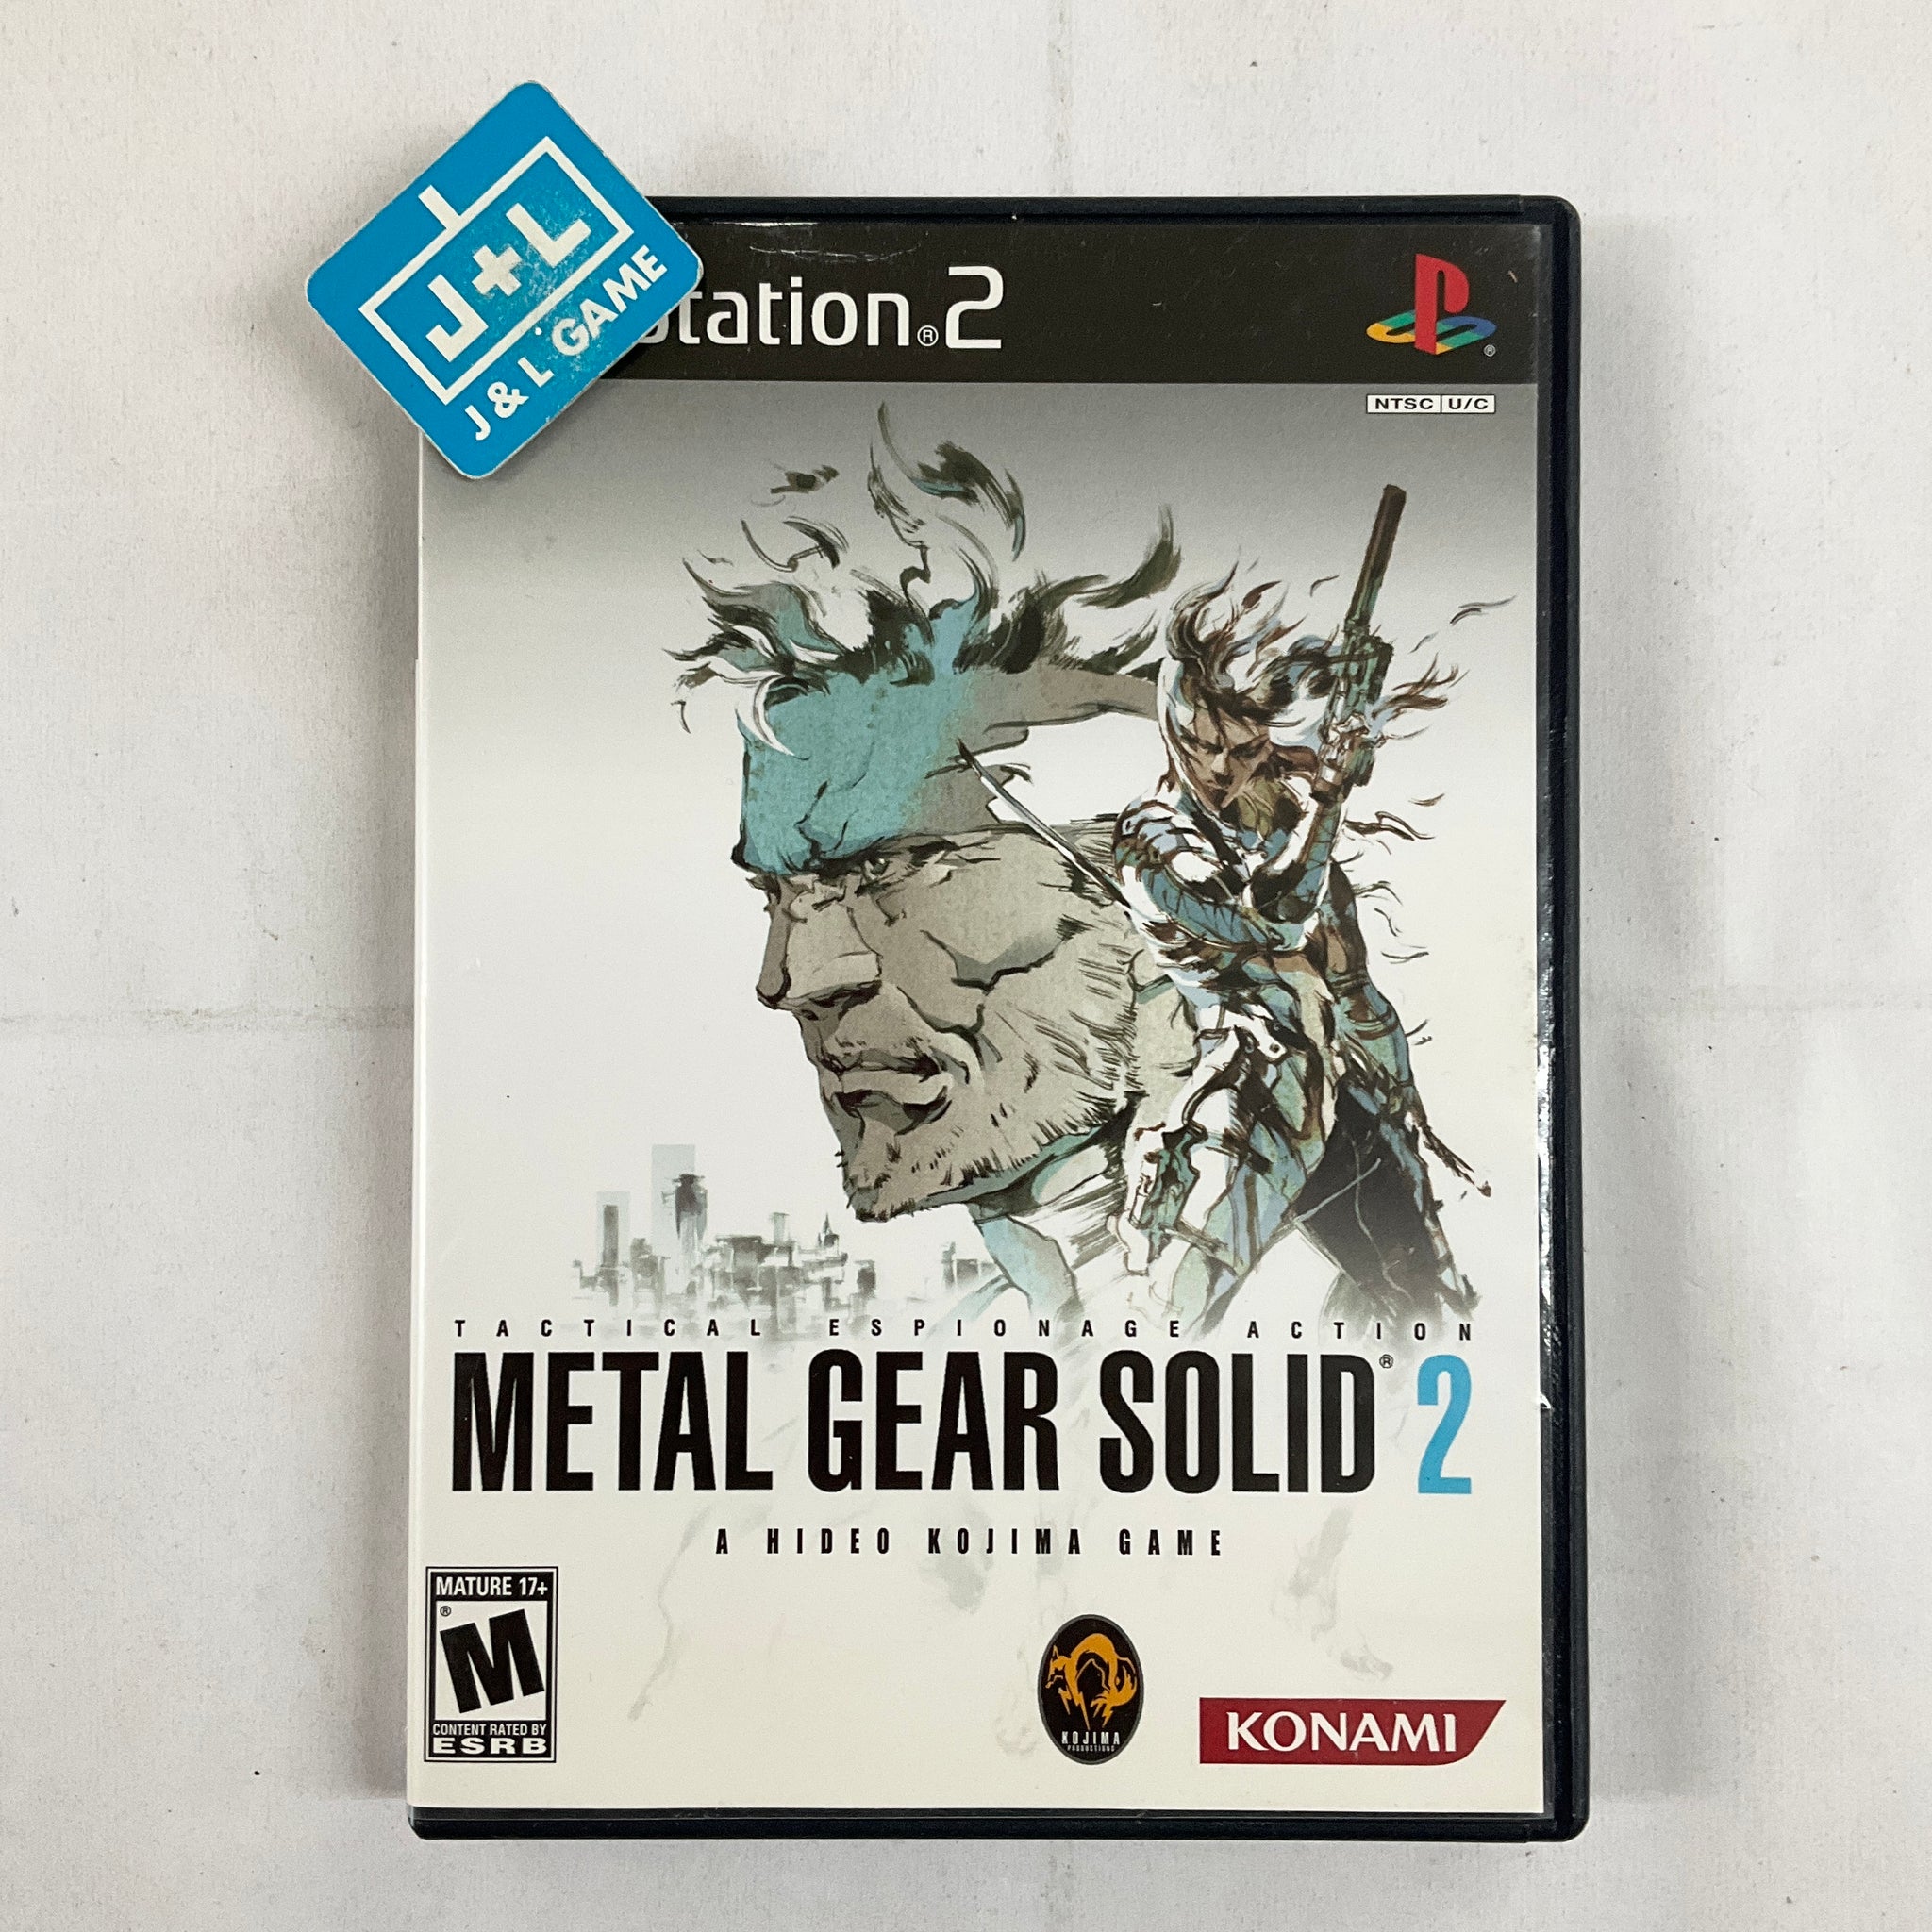 Metal Gear Solid V: Ground Zeroes eBook by GamerGuides.com - EPUB Book